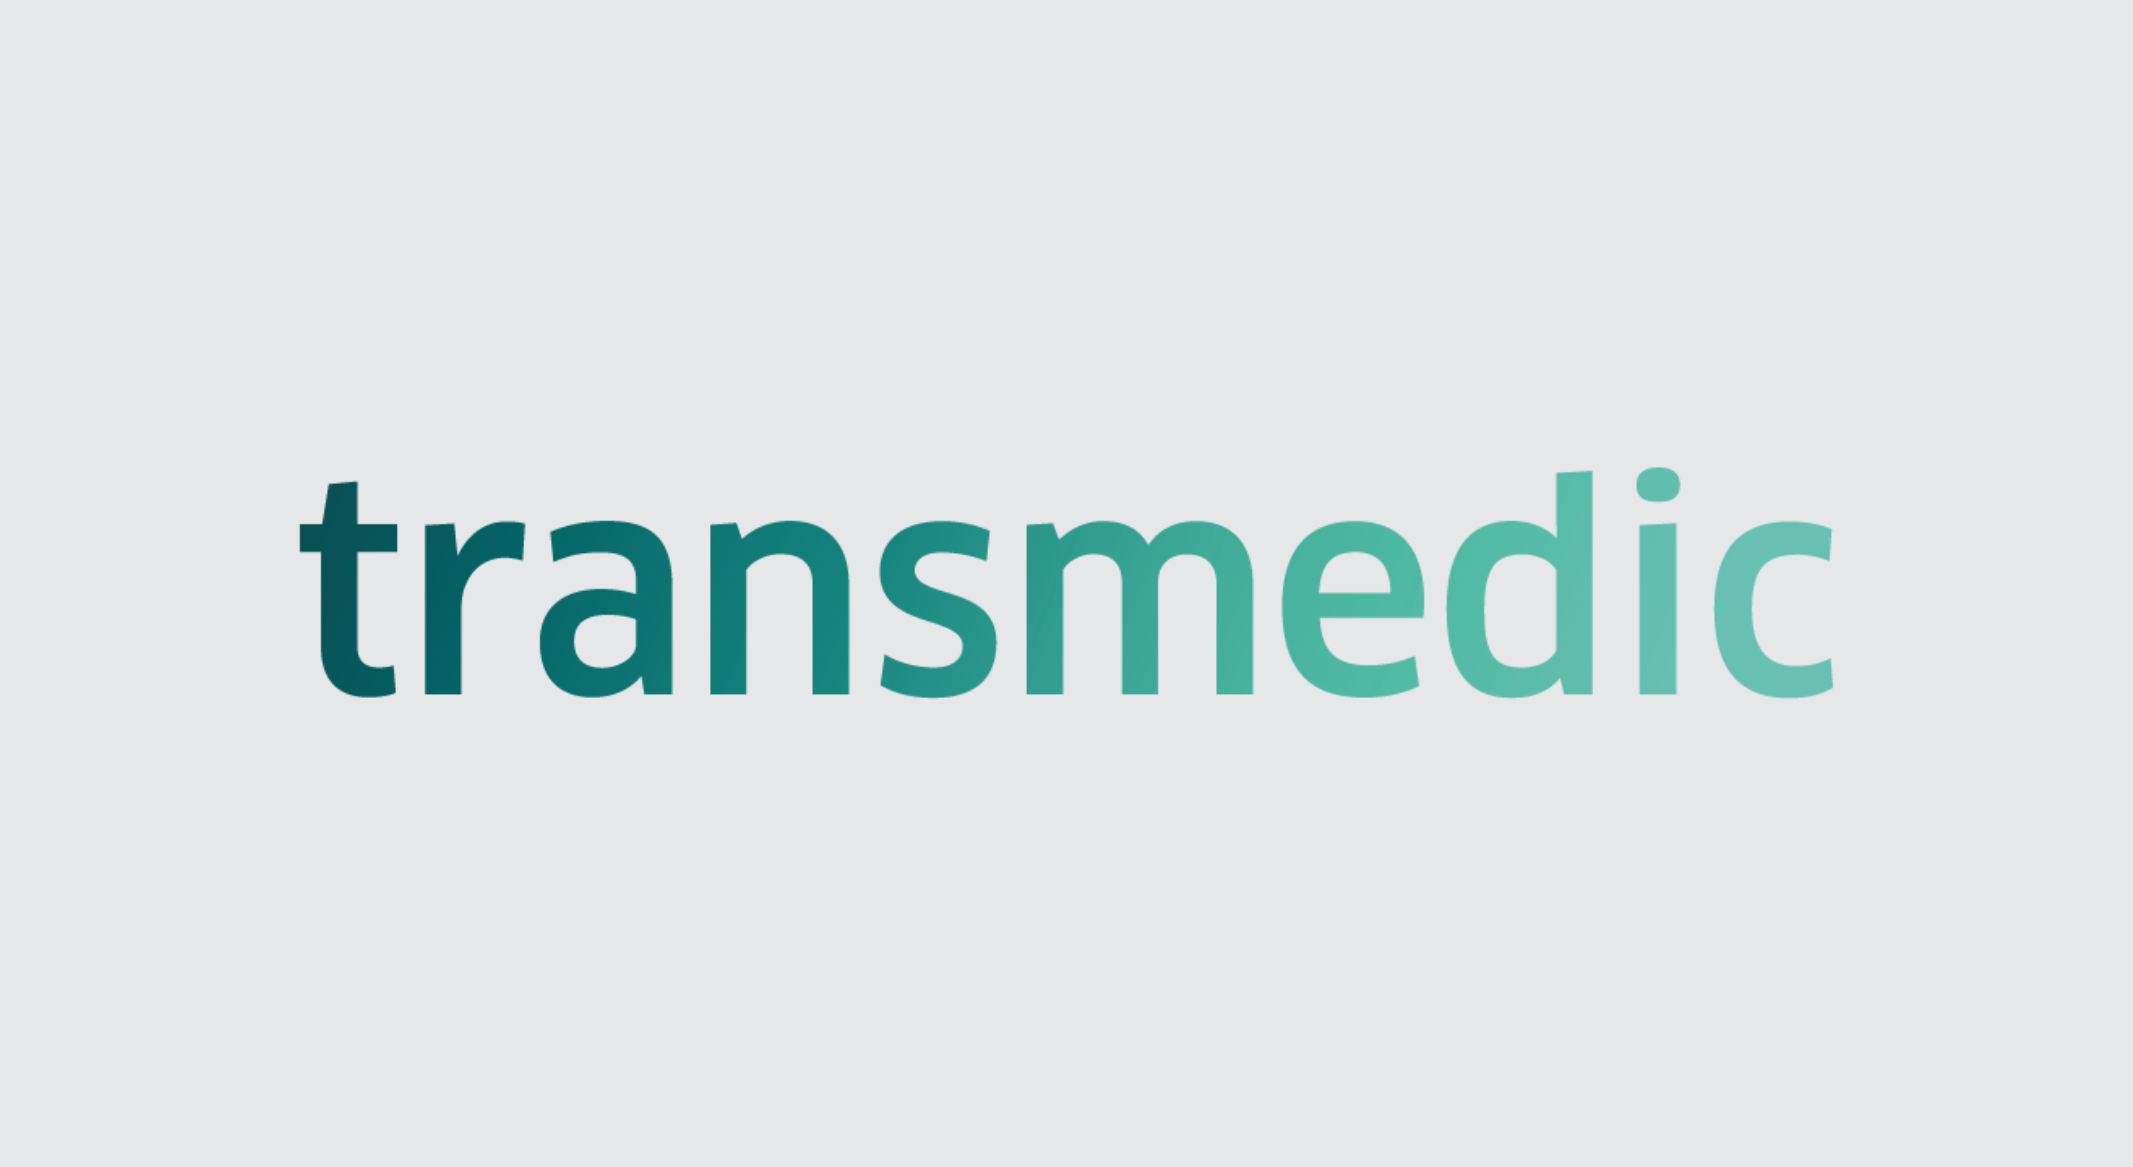 Transmedit website format